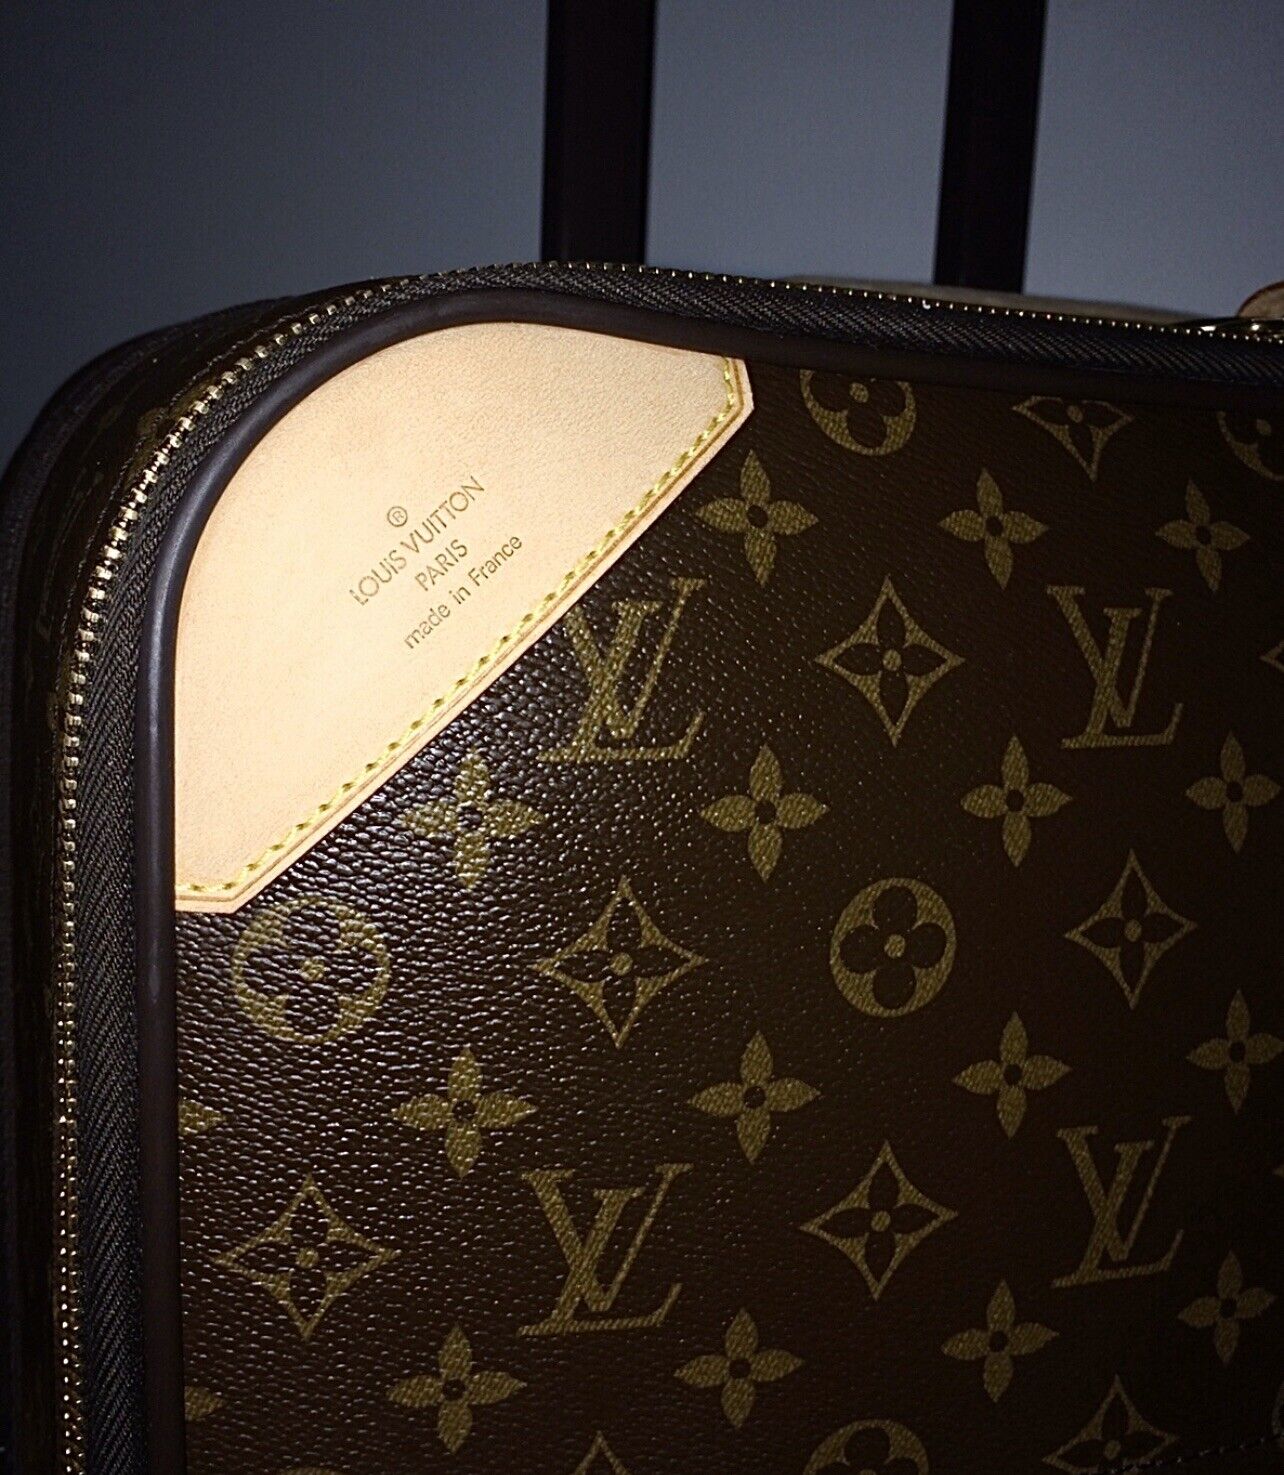 Louis Vuitton Pegase 70 Suitcase Wheels Bag w/ Garment Bag Dustbag 🇫🇷